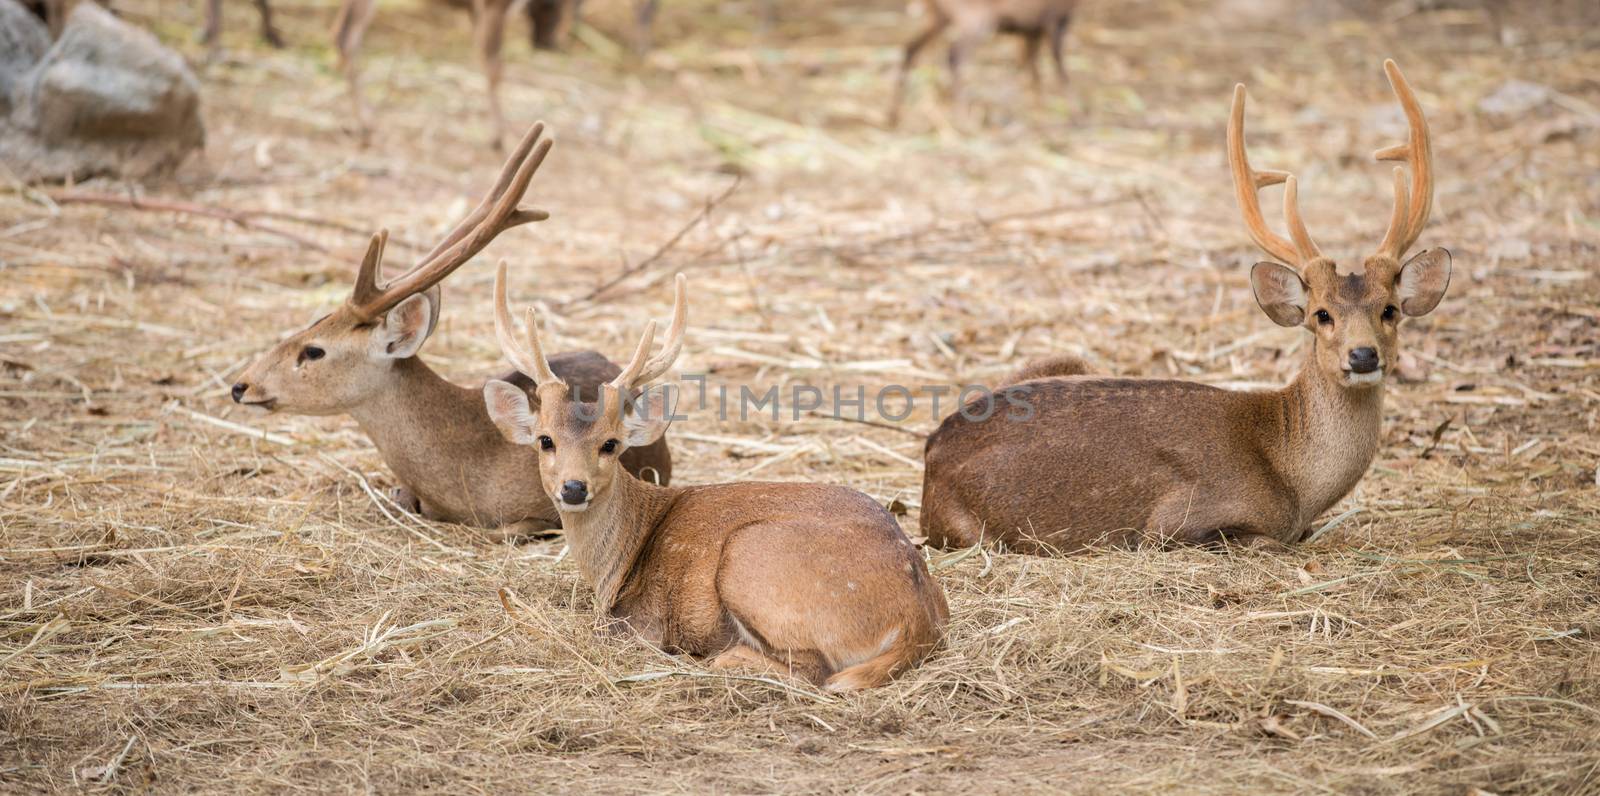 hog deer or Hyelaphus porcinus